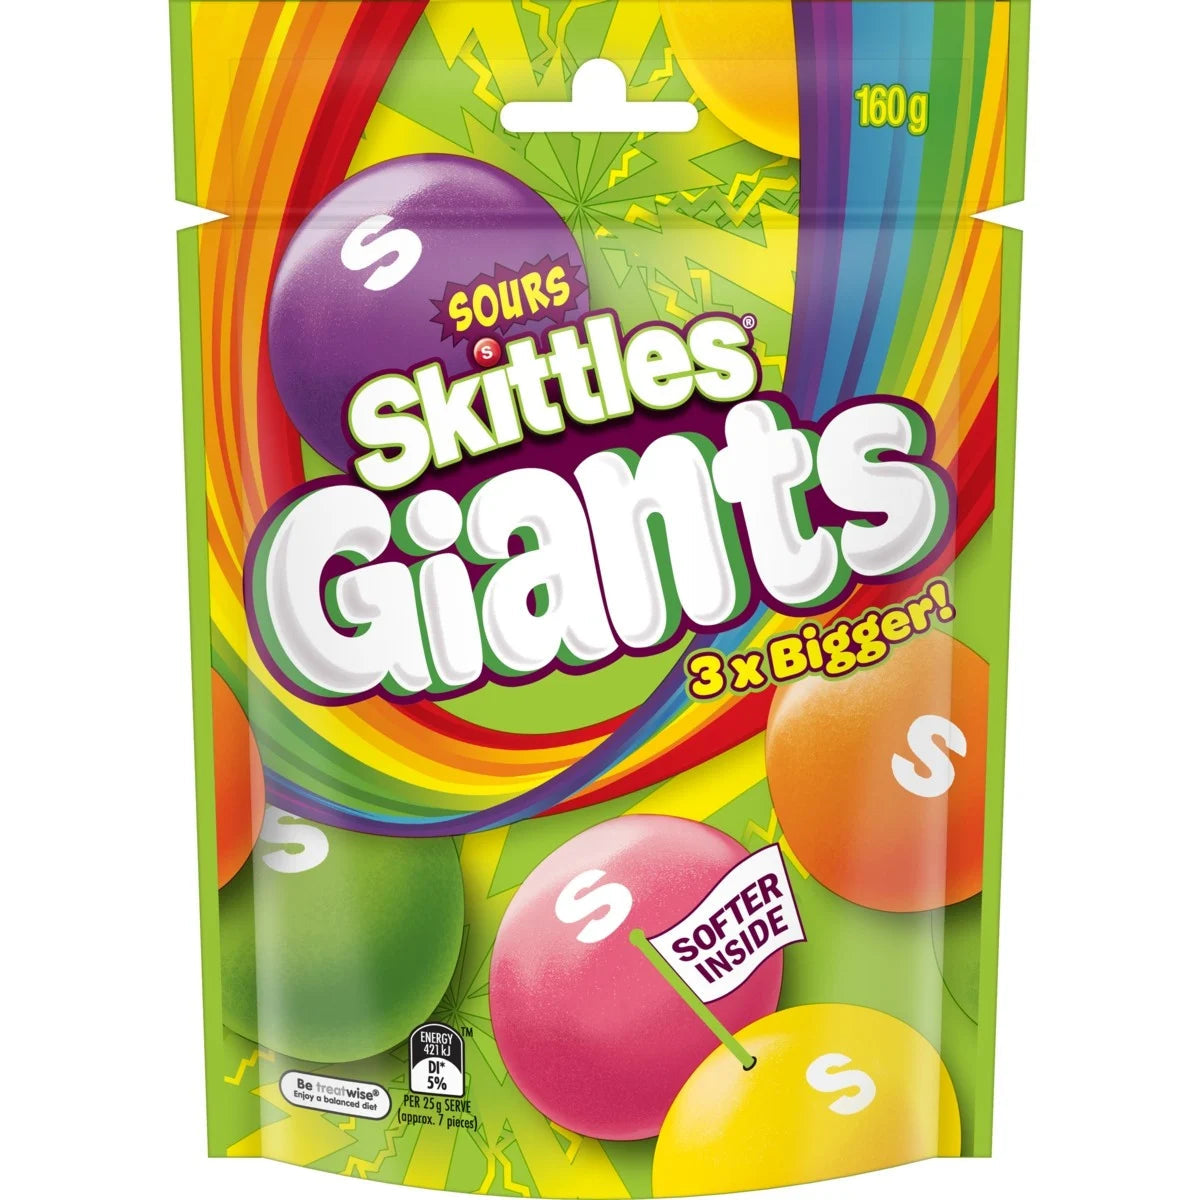 Skittles GIANTS Crazy Sours (UK)